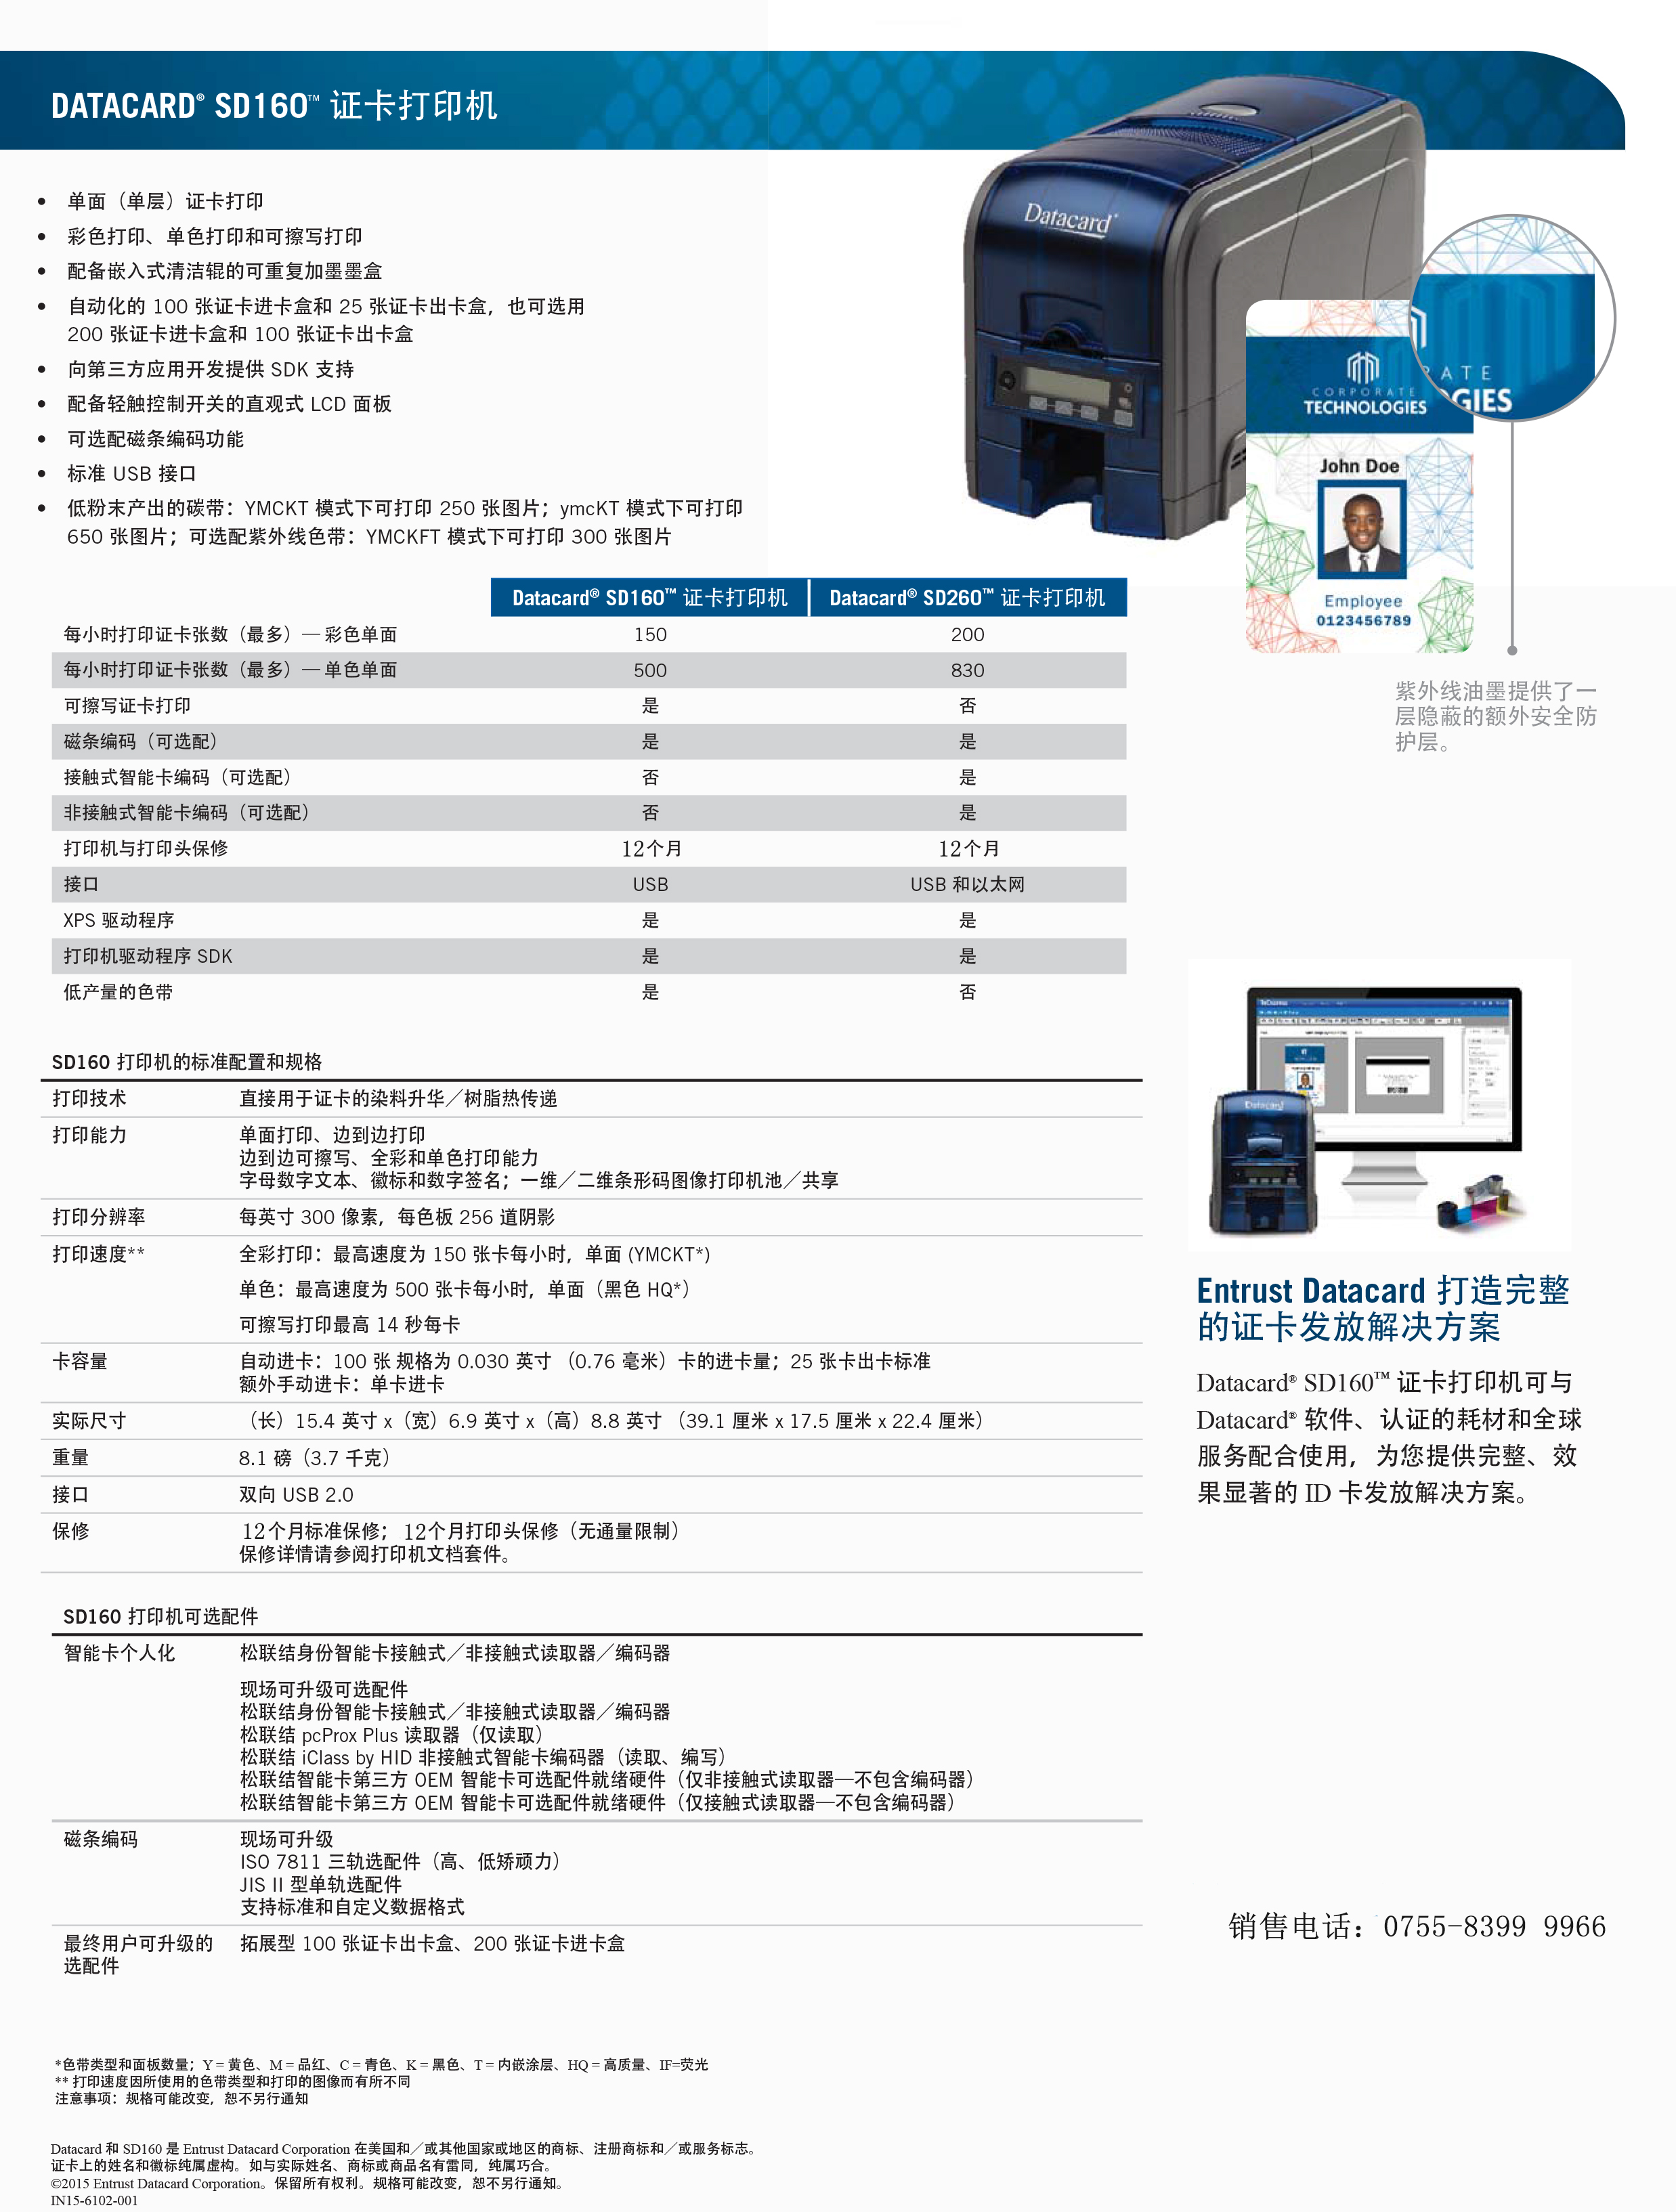 Datacard品牌  其他办公设备  SD160